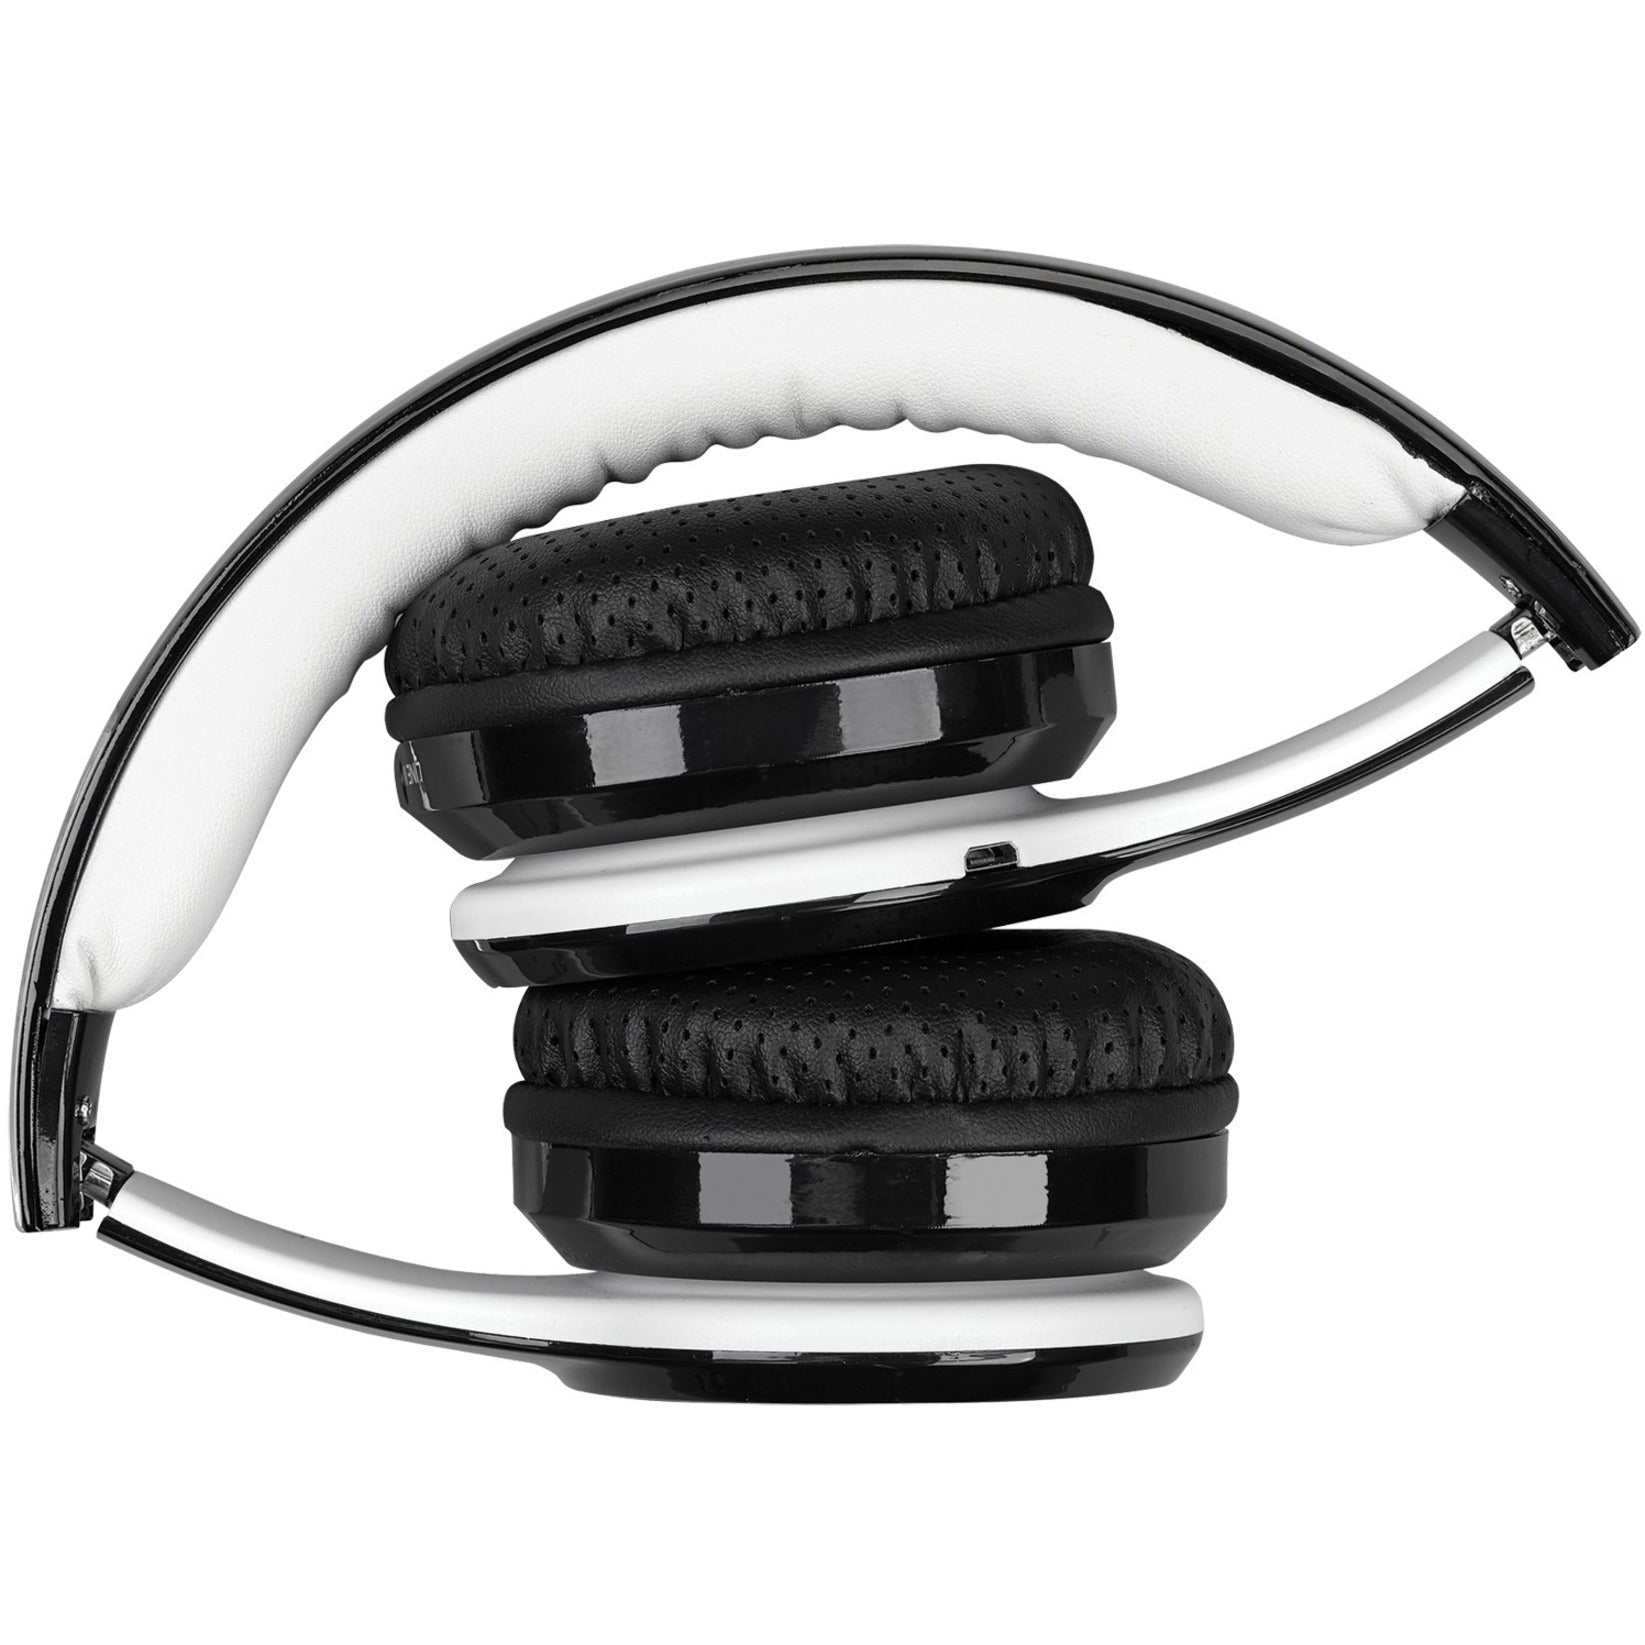 iLive IAHB239B Wireless Headphones, LED Indicator, USB Charging, Voice Prompt